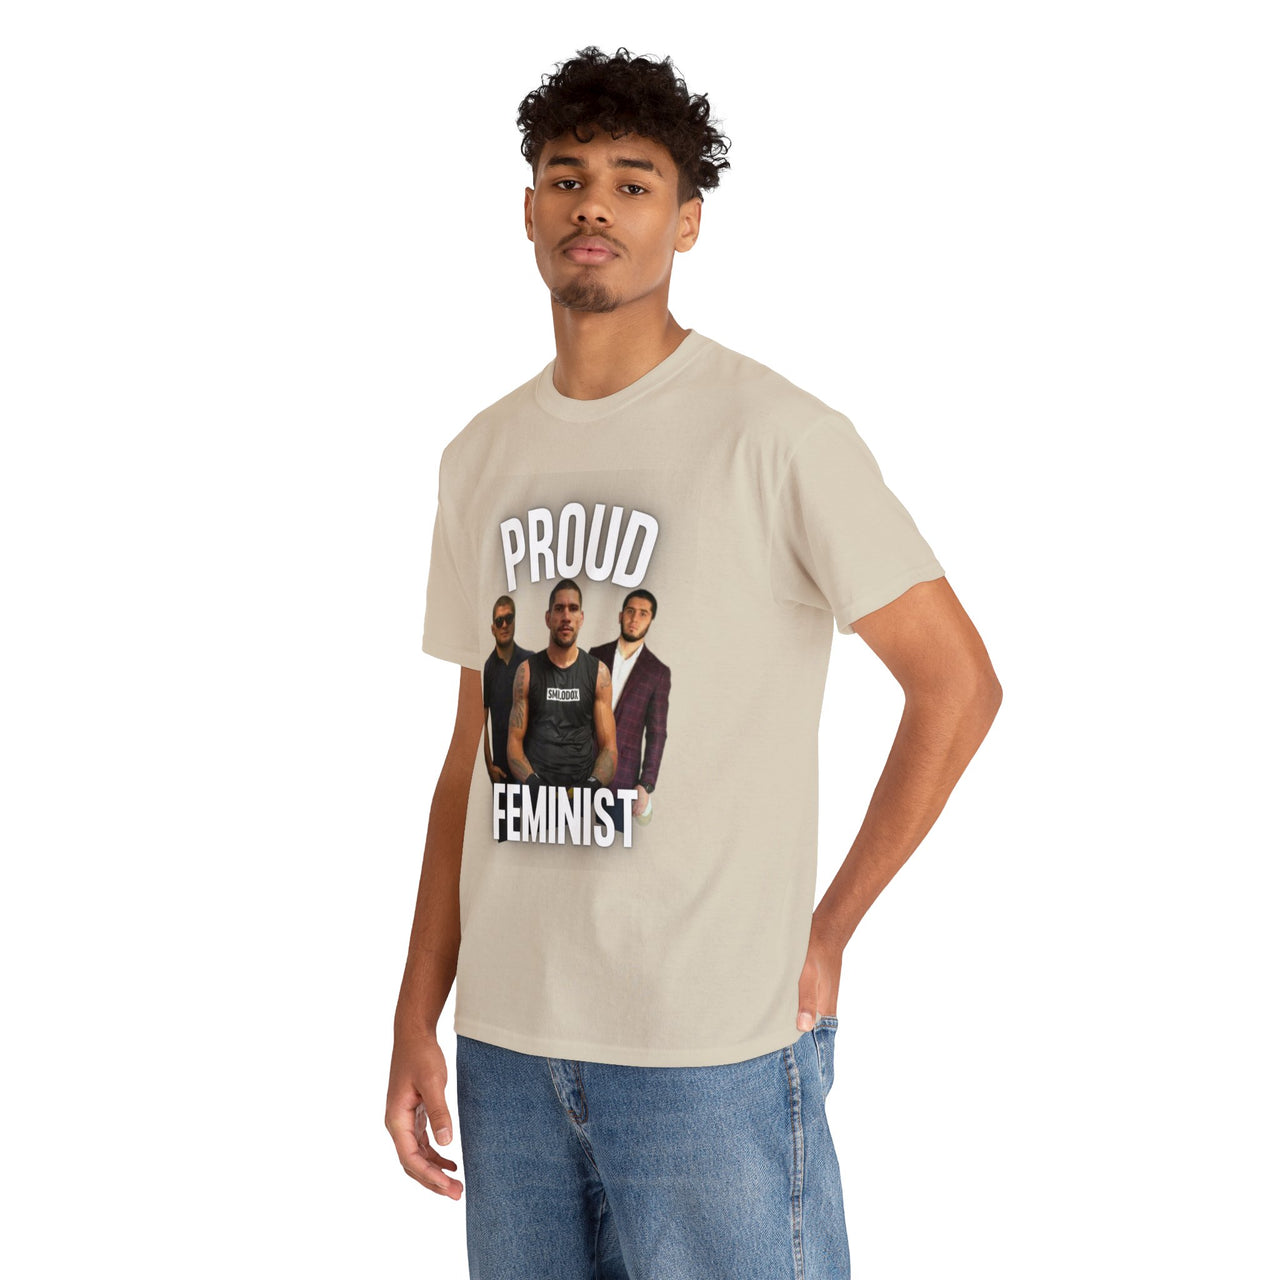 Proud Feminist T-shirt